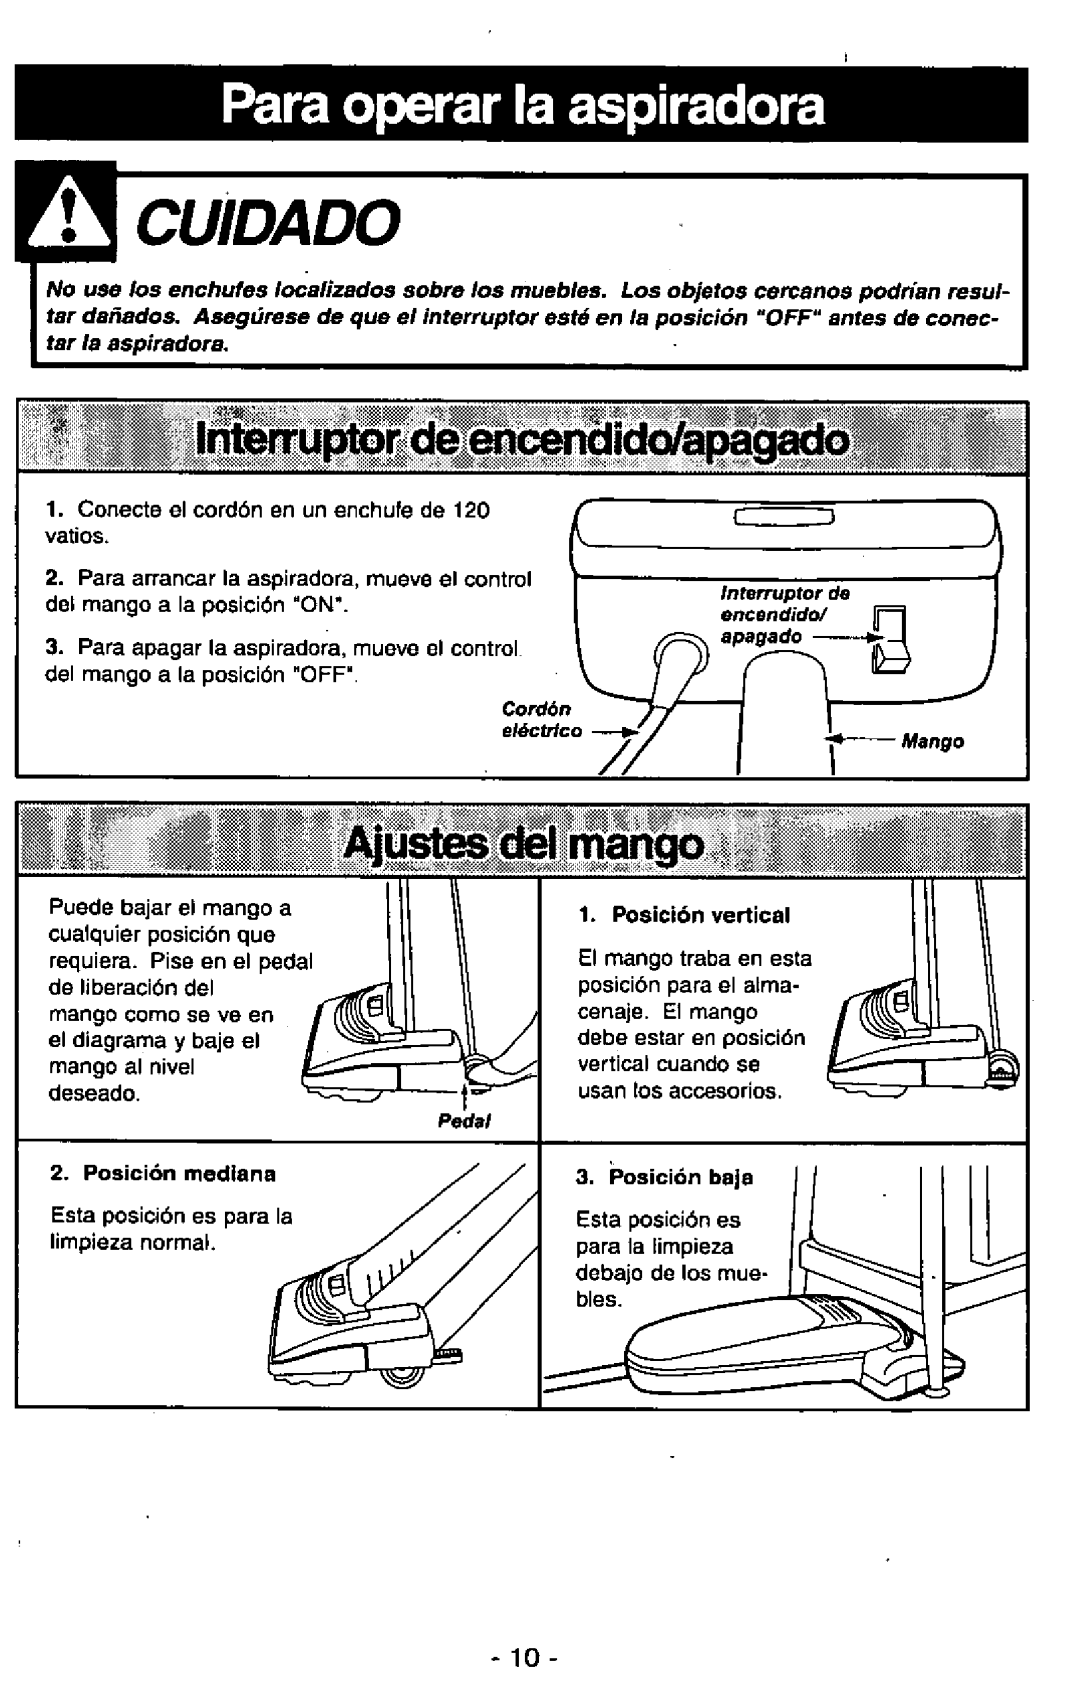 Panasonic MC-V300 manual 